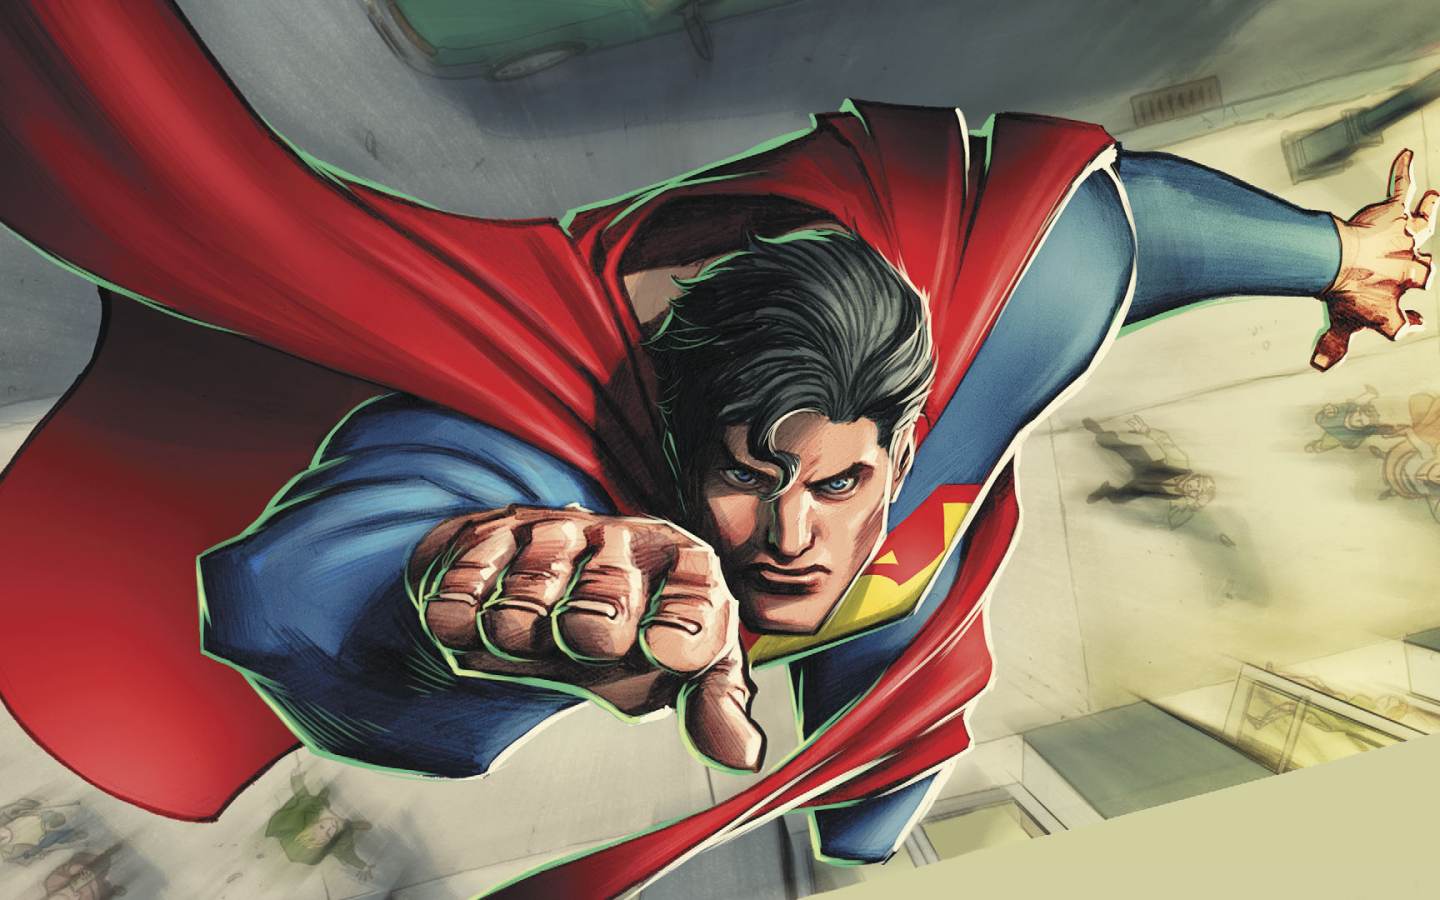 Download wallpaper 1440x900 comics, superhero, superman, 1440x900  widescreen 16:10 hd background, 1616